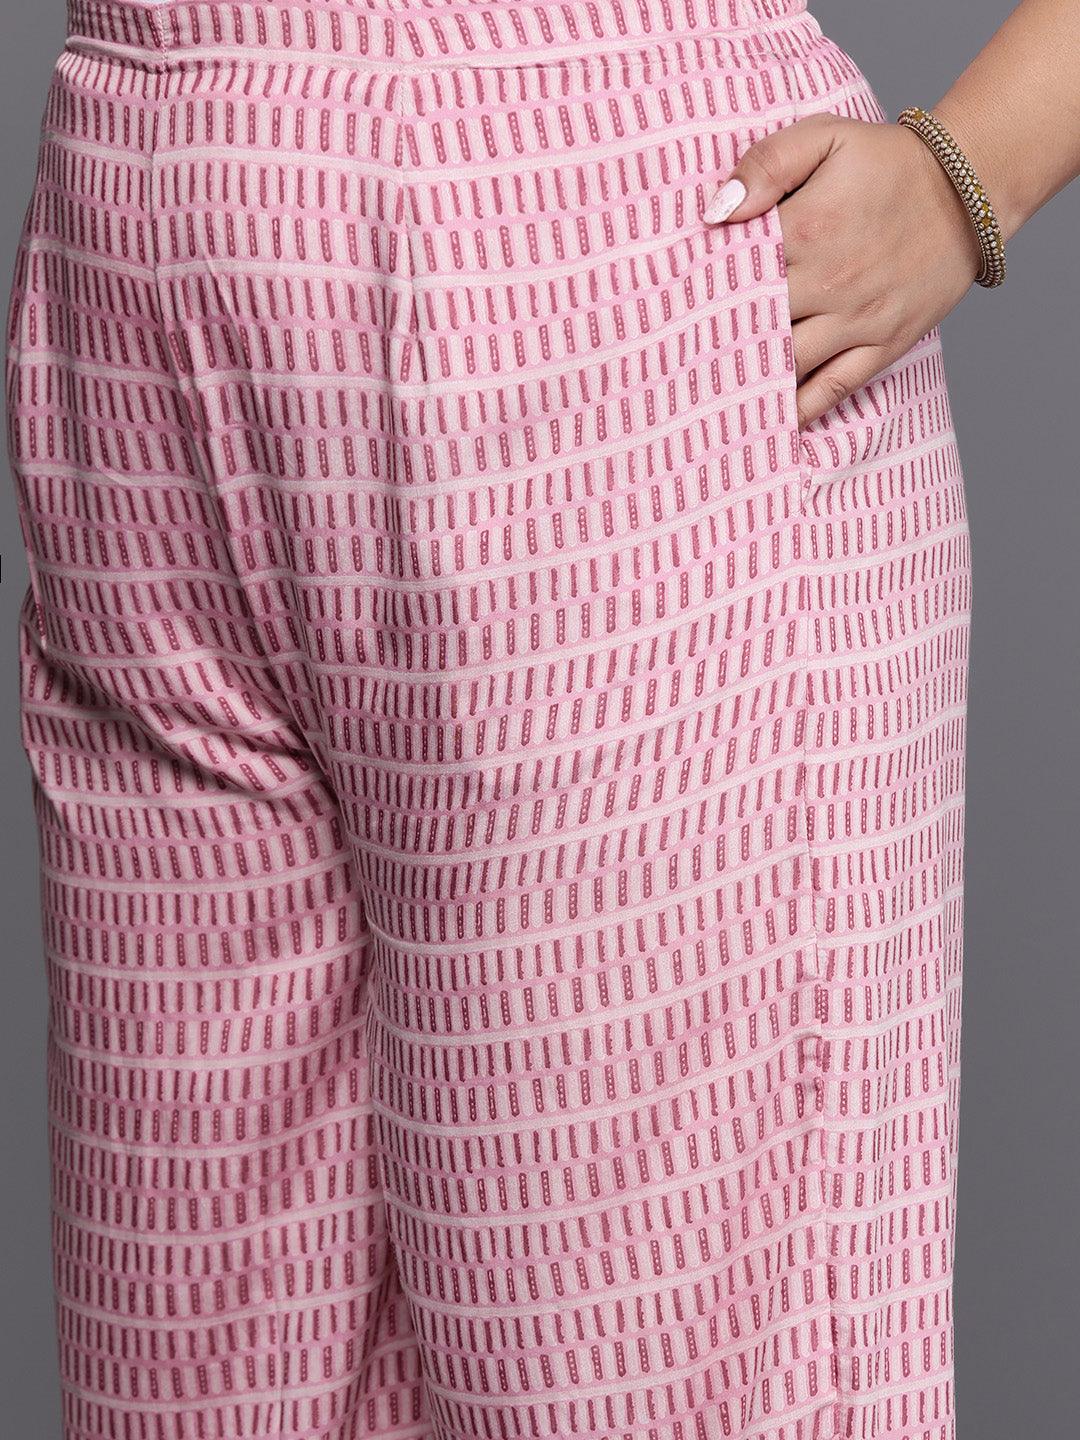 Plus Size Pink Printed Silk Blend Straight Kurta With Dupatta